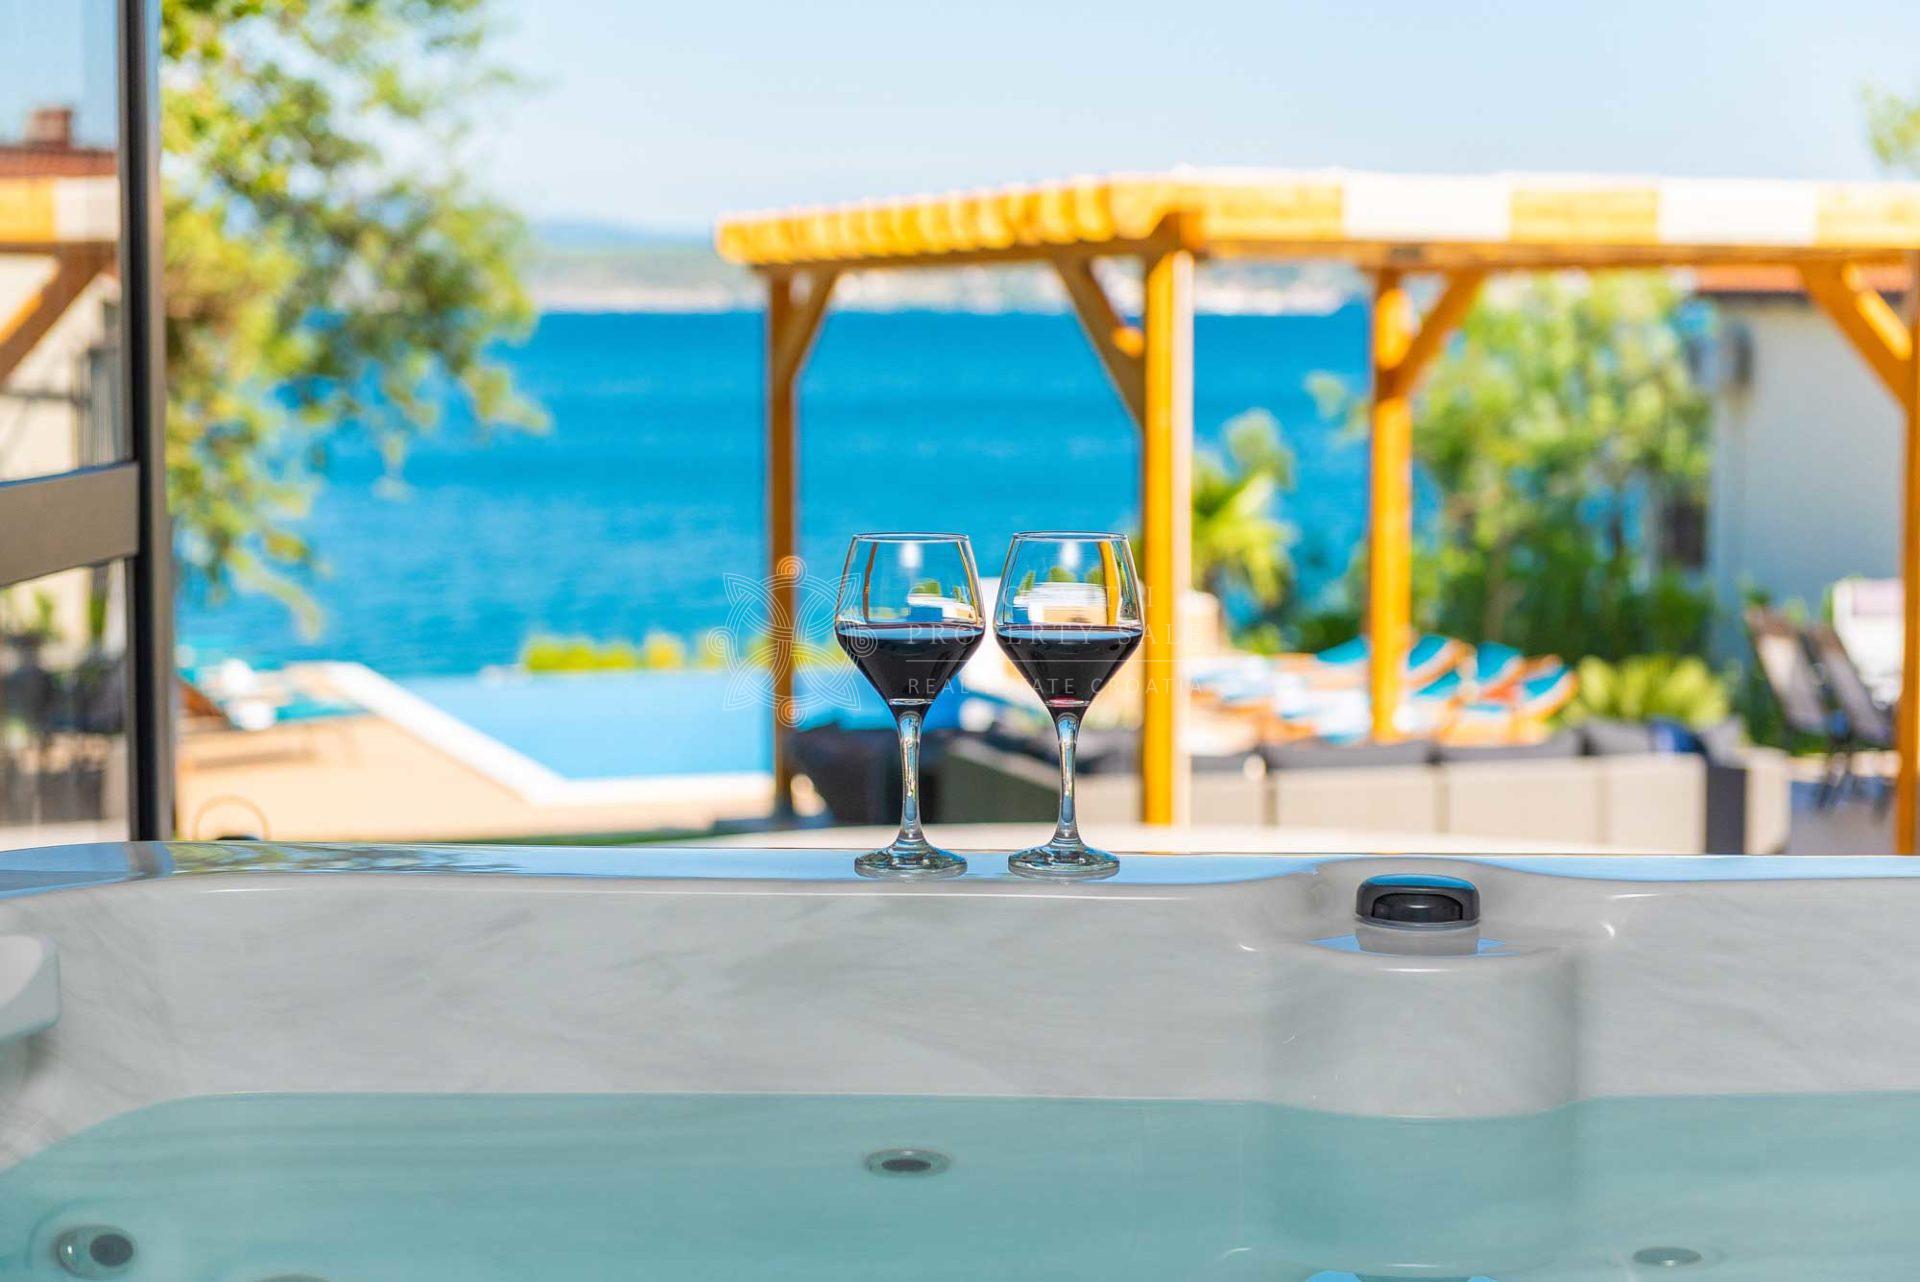 Croatia Zadar area waterfront villa for sale with pool